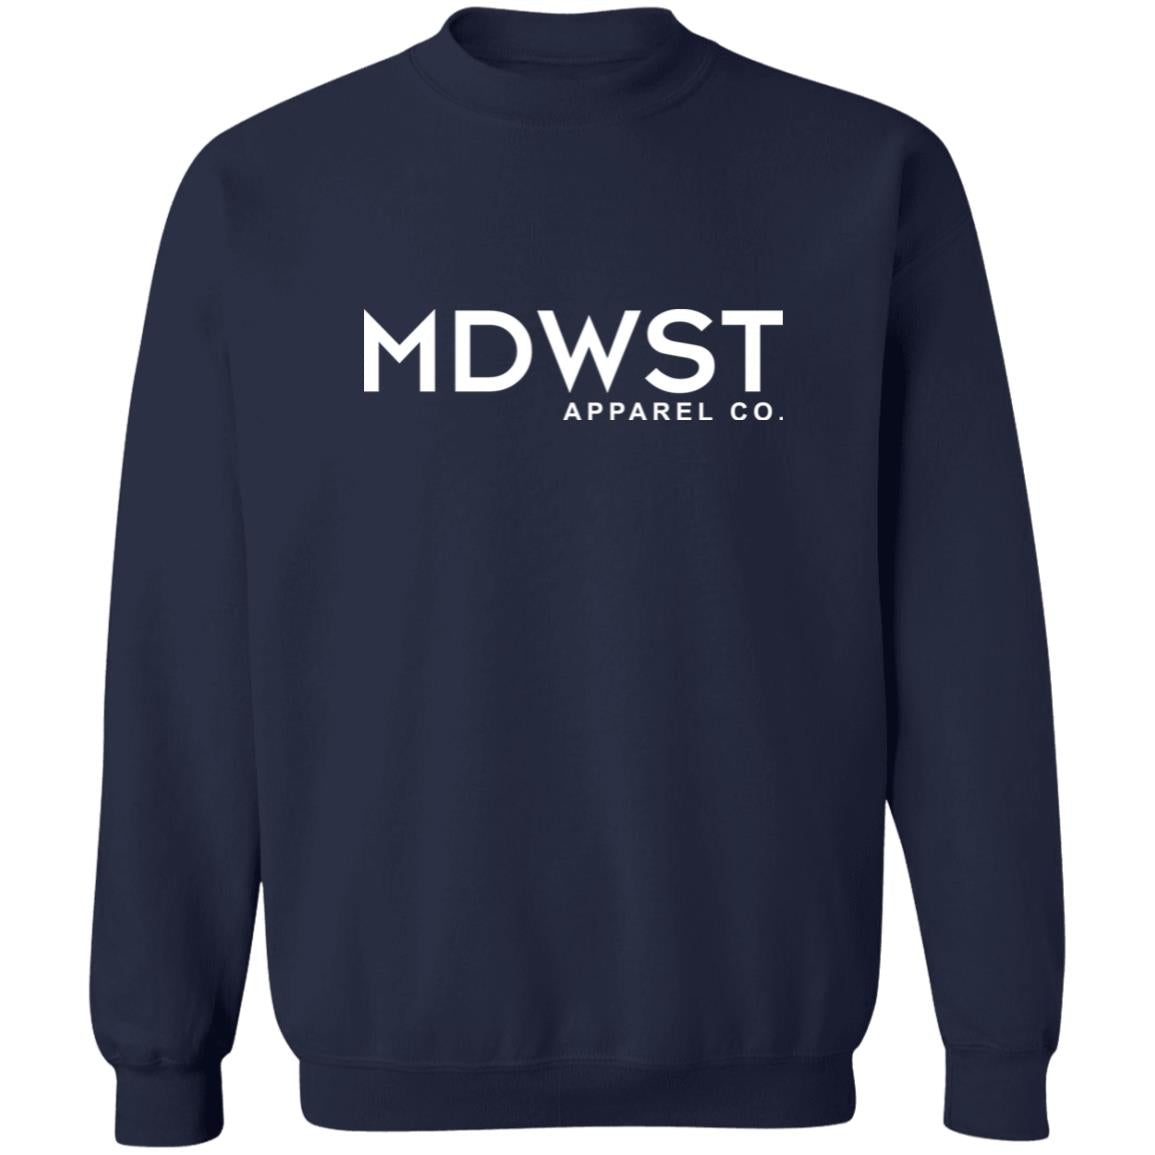 MDWST Crewneck Pullover Sweatshirt